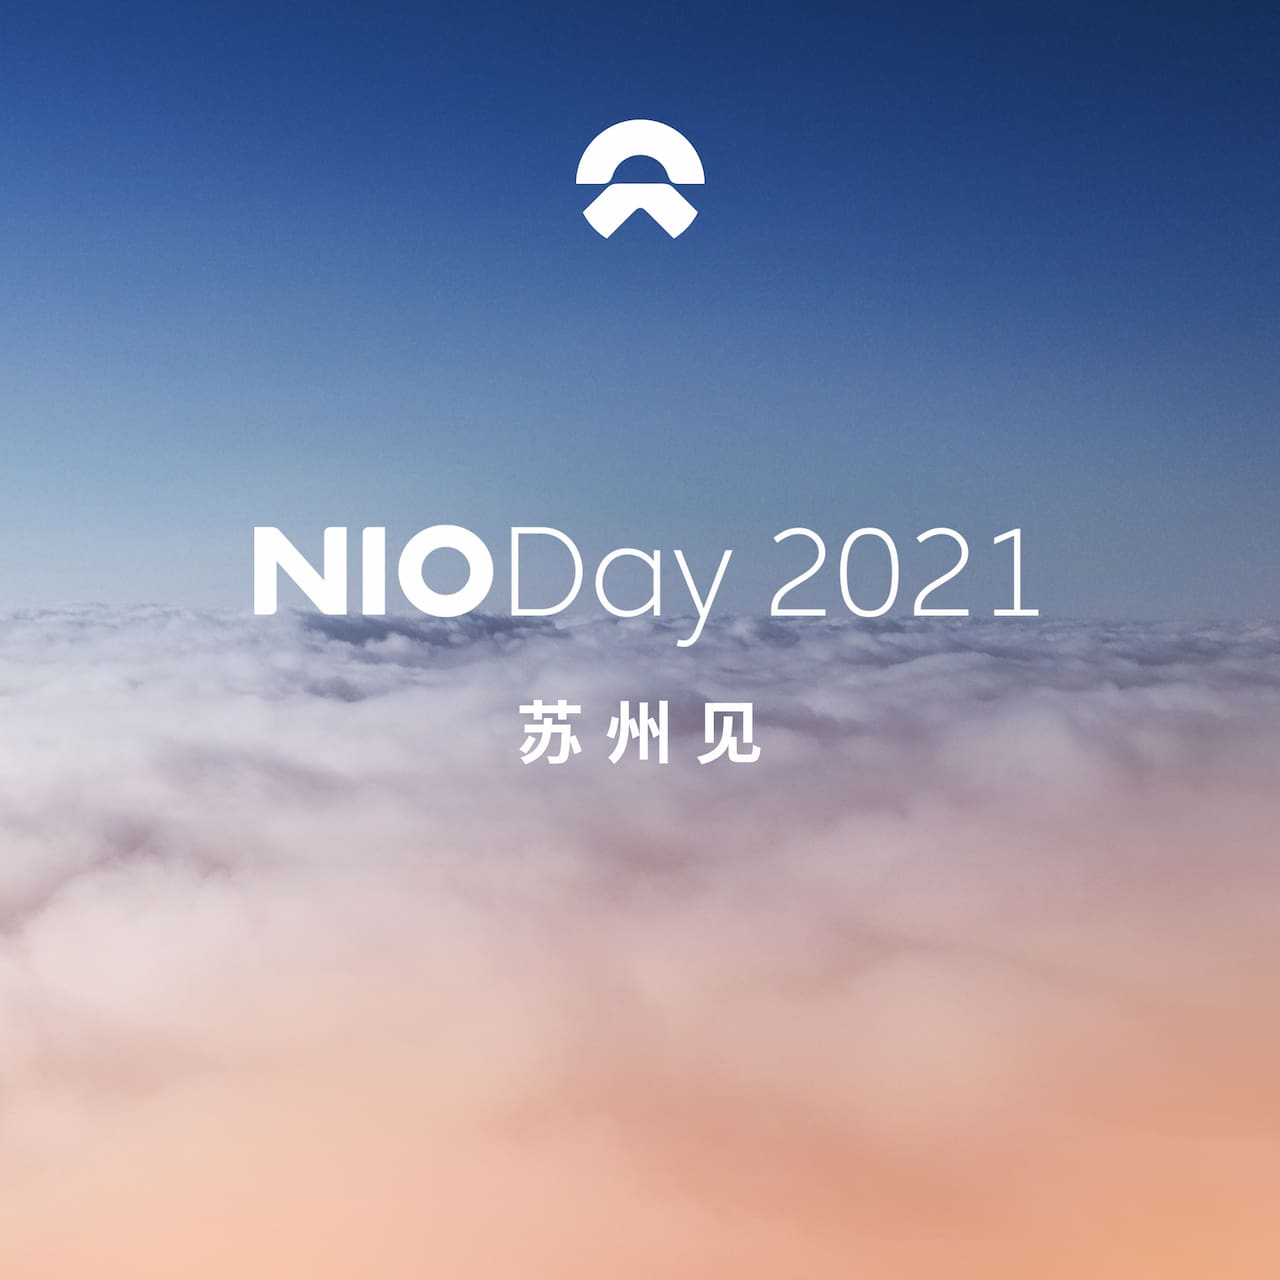 Nio Day 2021